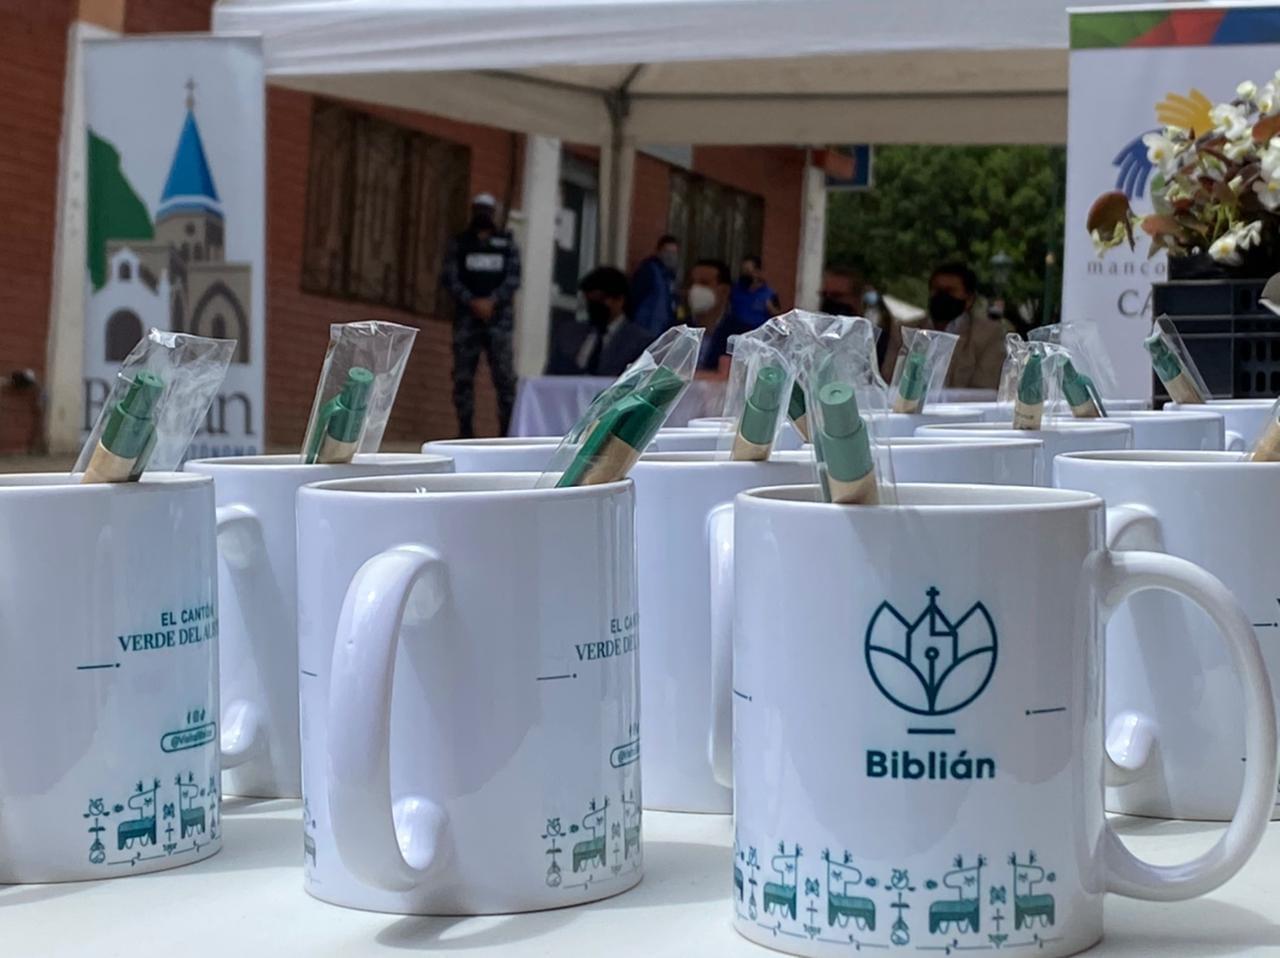 Presentation of the Biblián brand